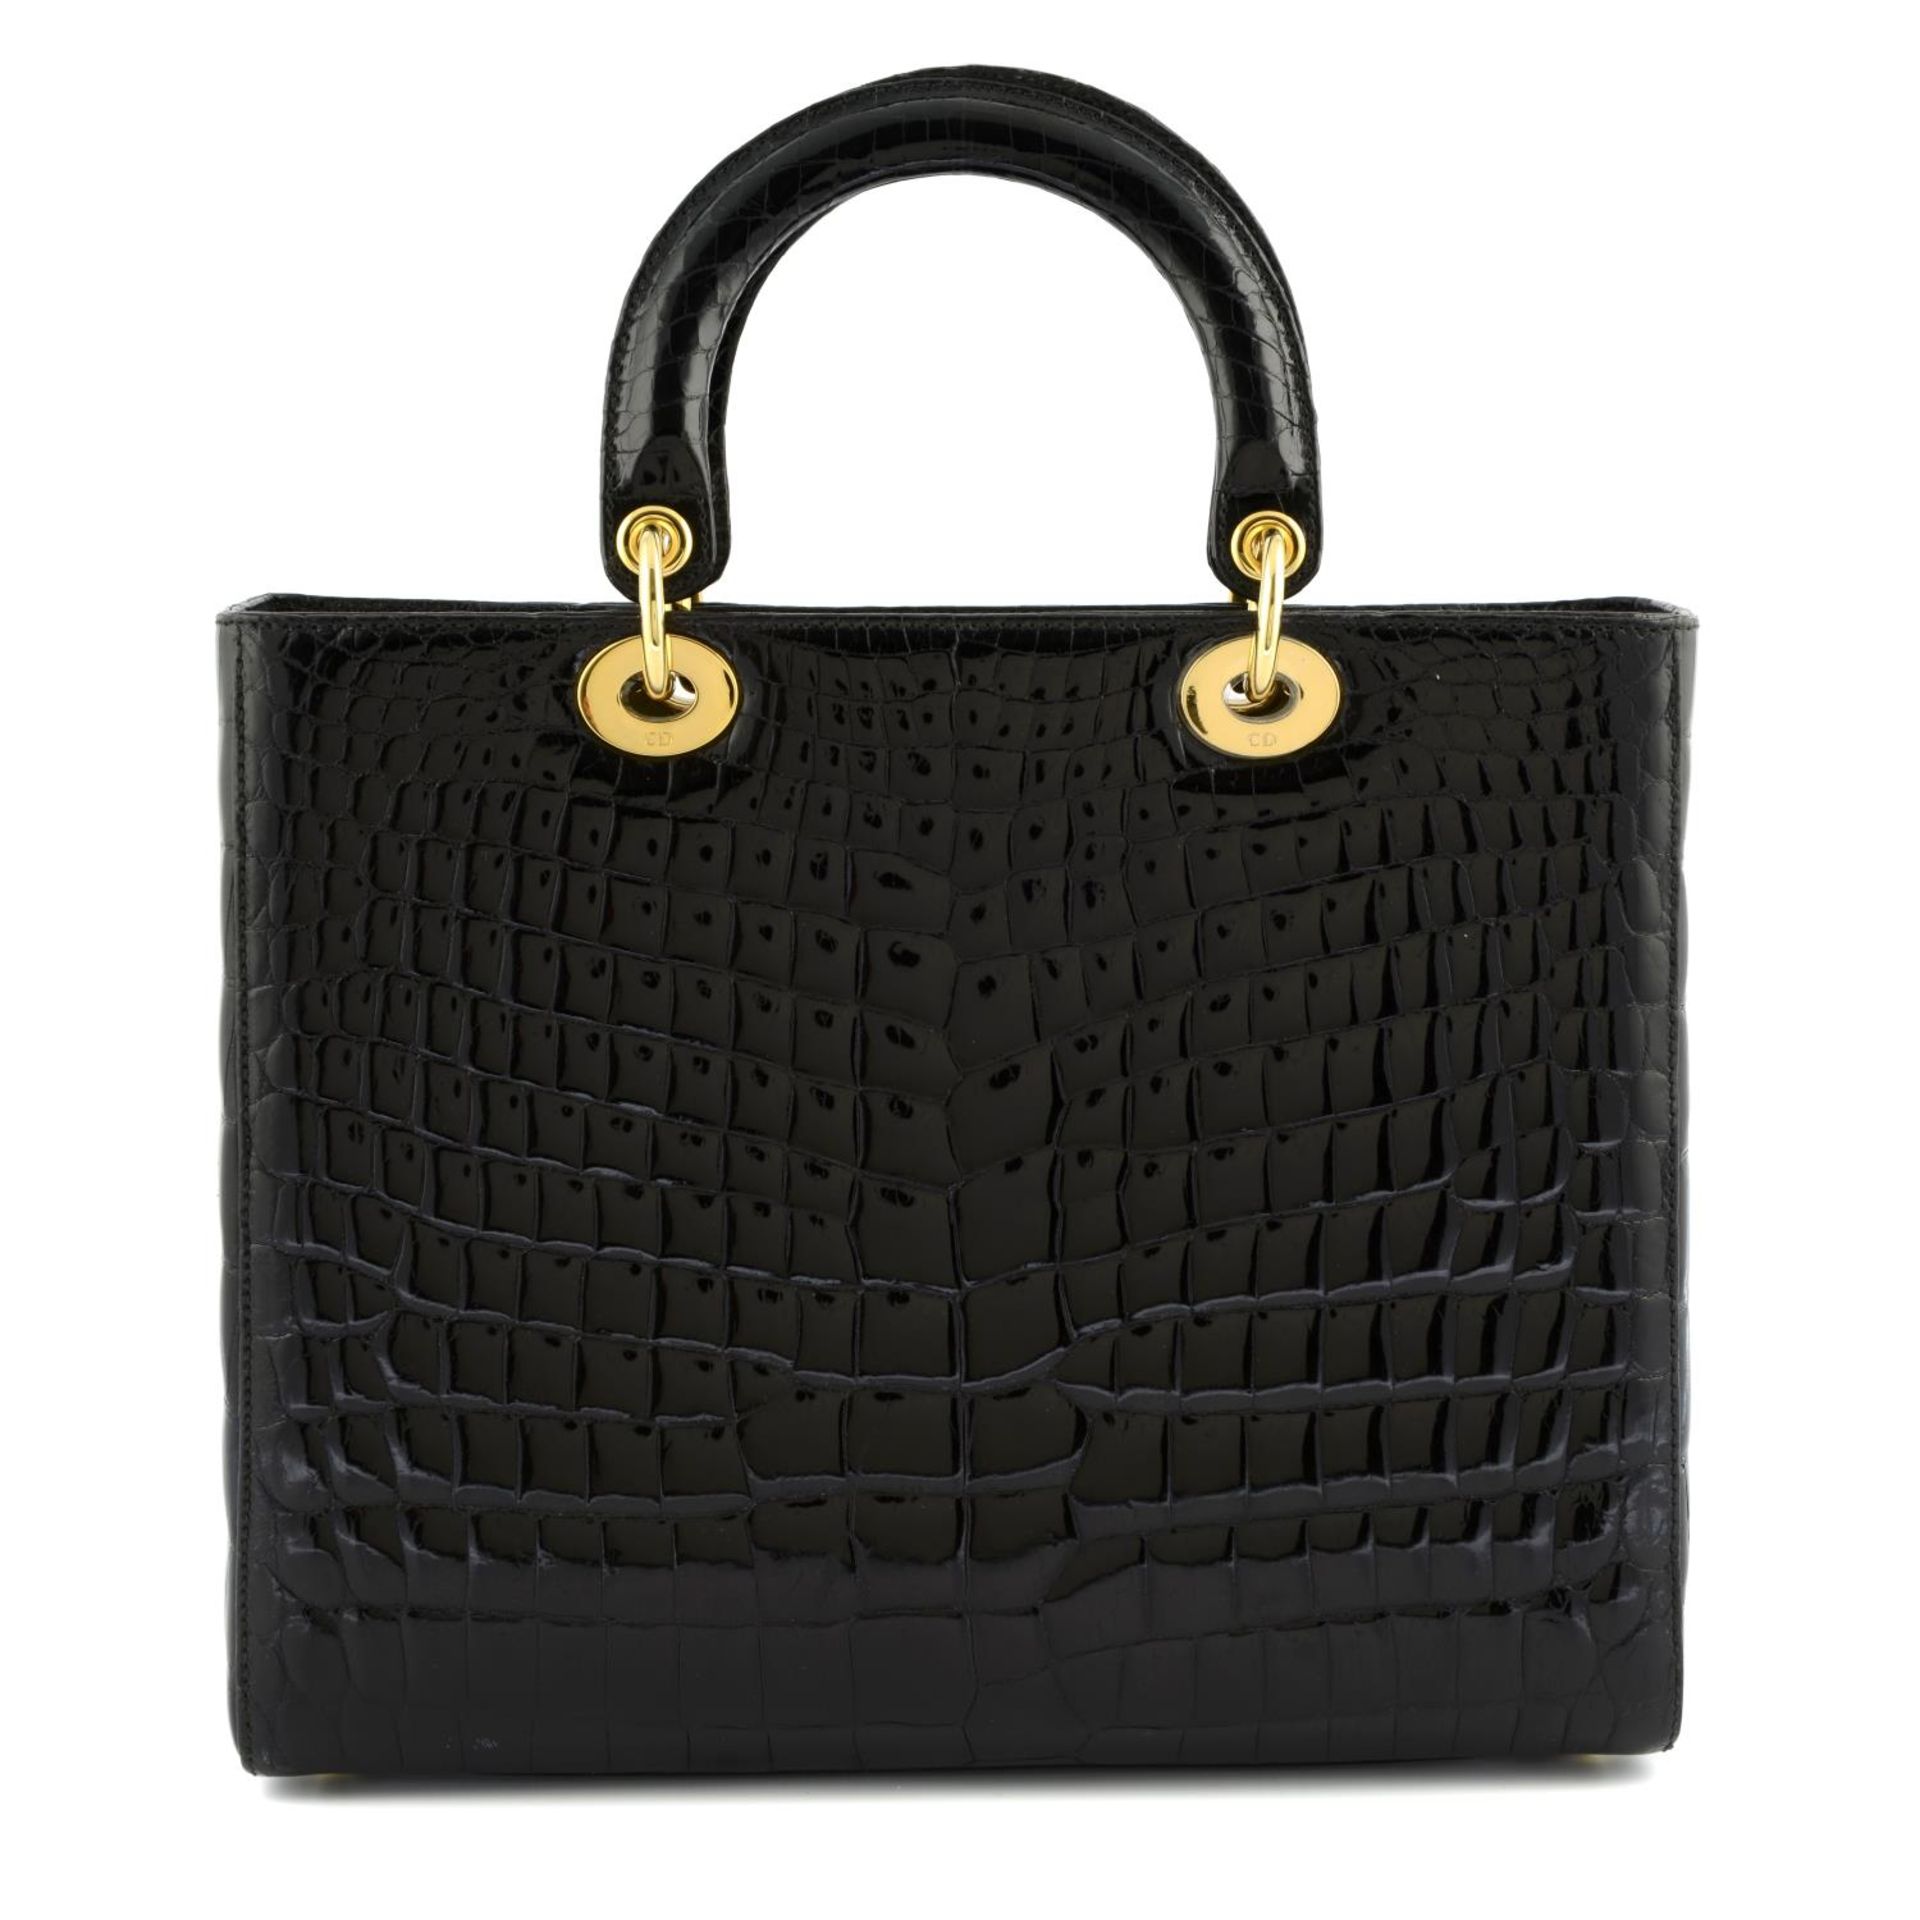 CHRISTIAN DIOR - a black crocodile Lady Dior handbag. - Image 2 of 5